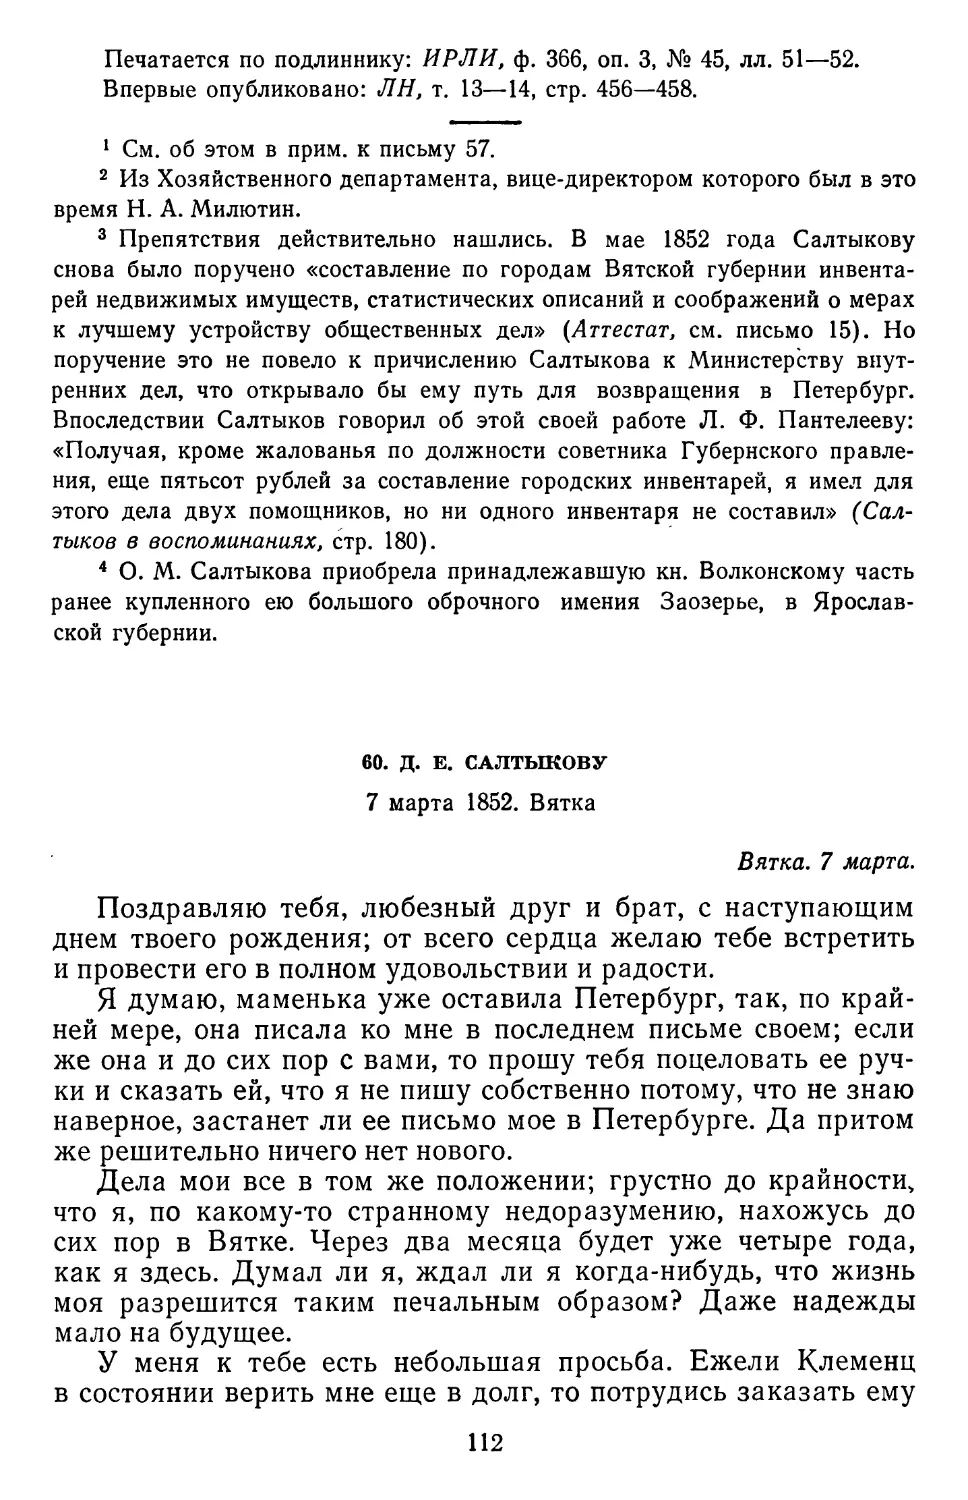 60.Д. Е. Салтыкову. 7 марта 1852. Вятка